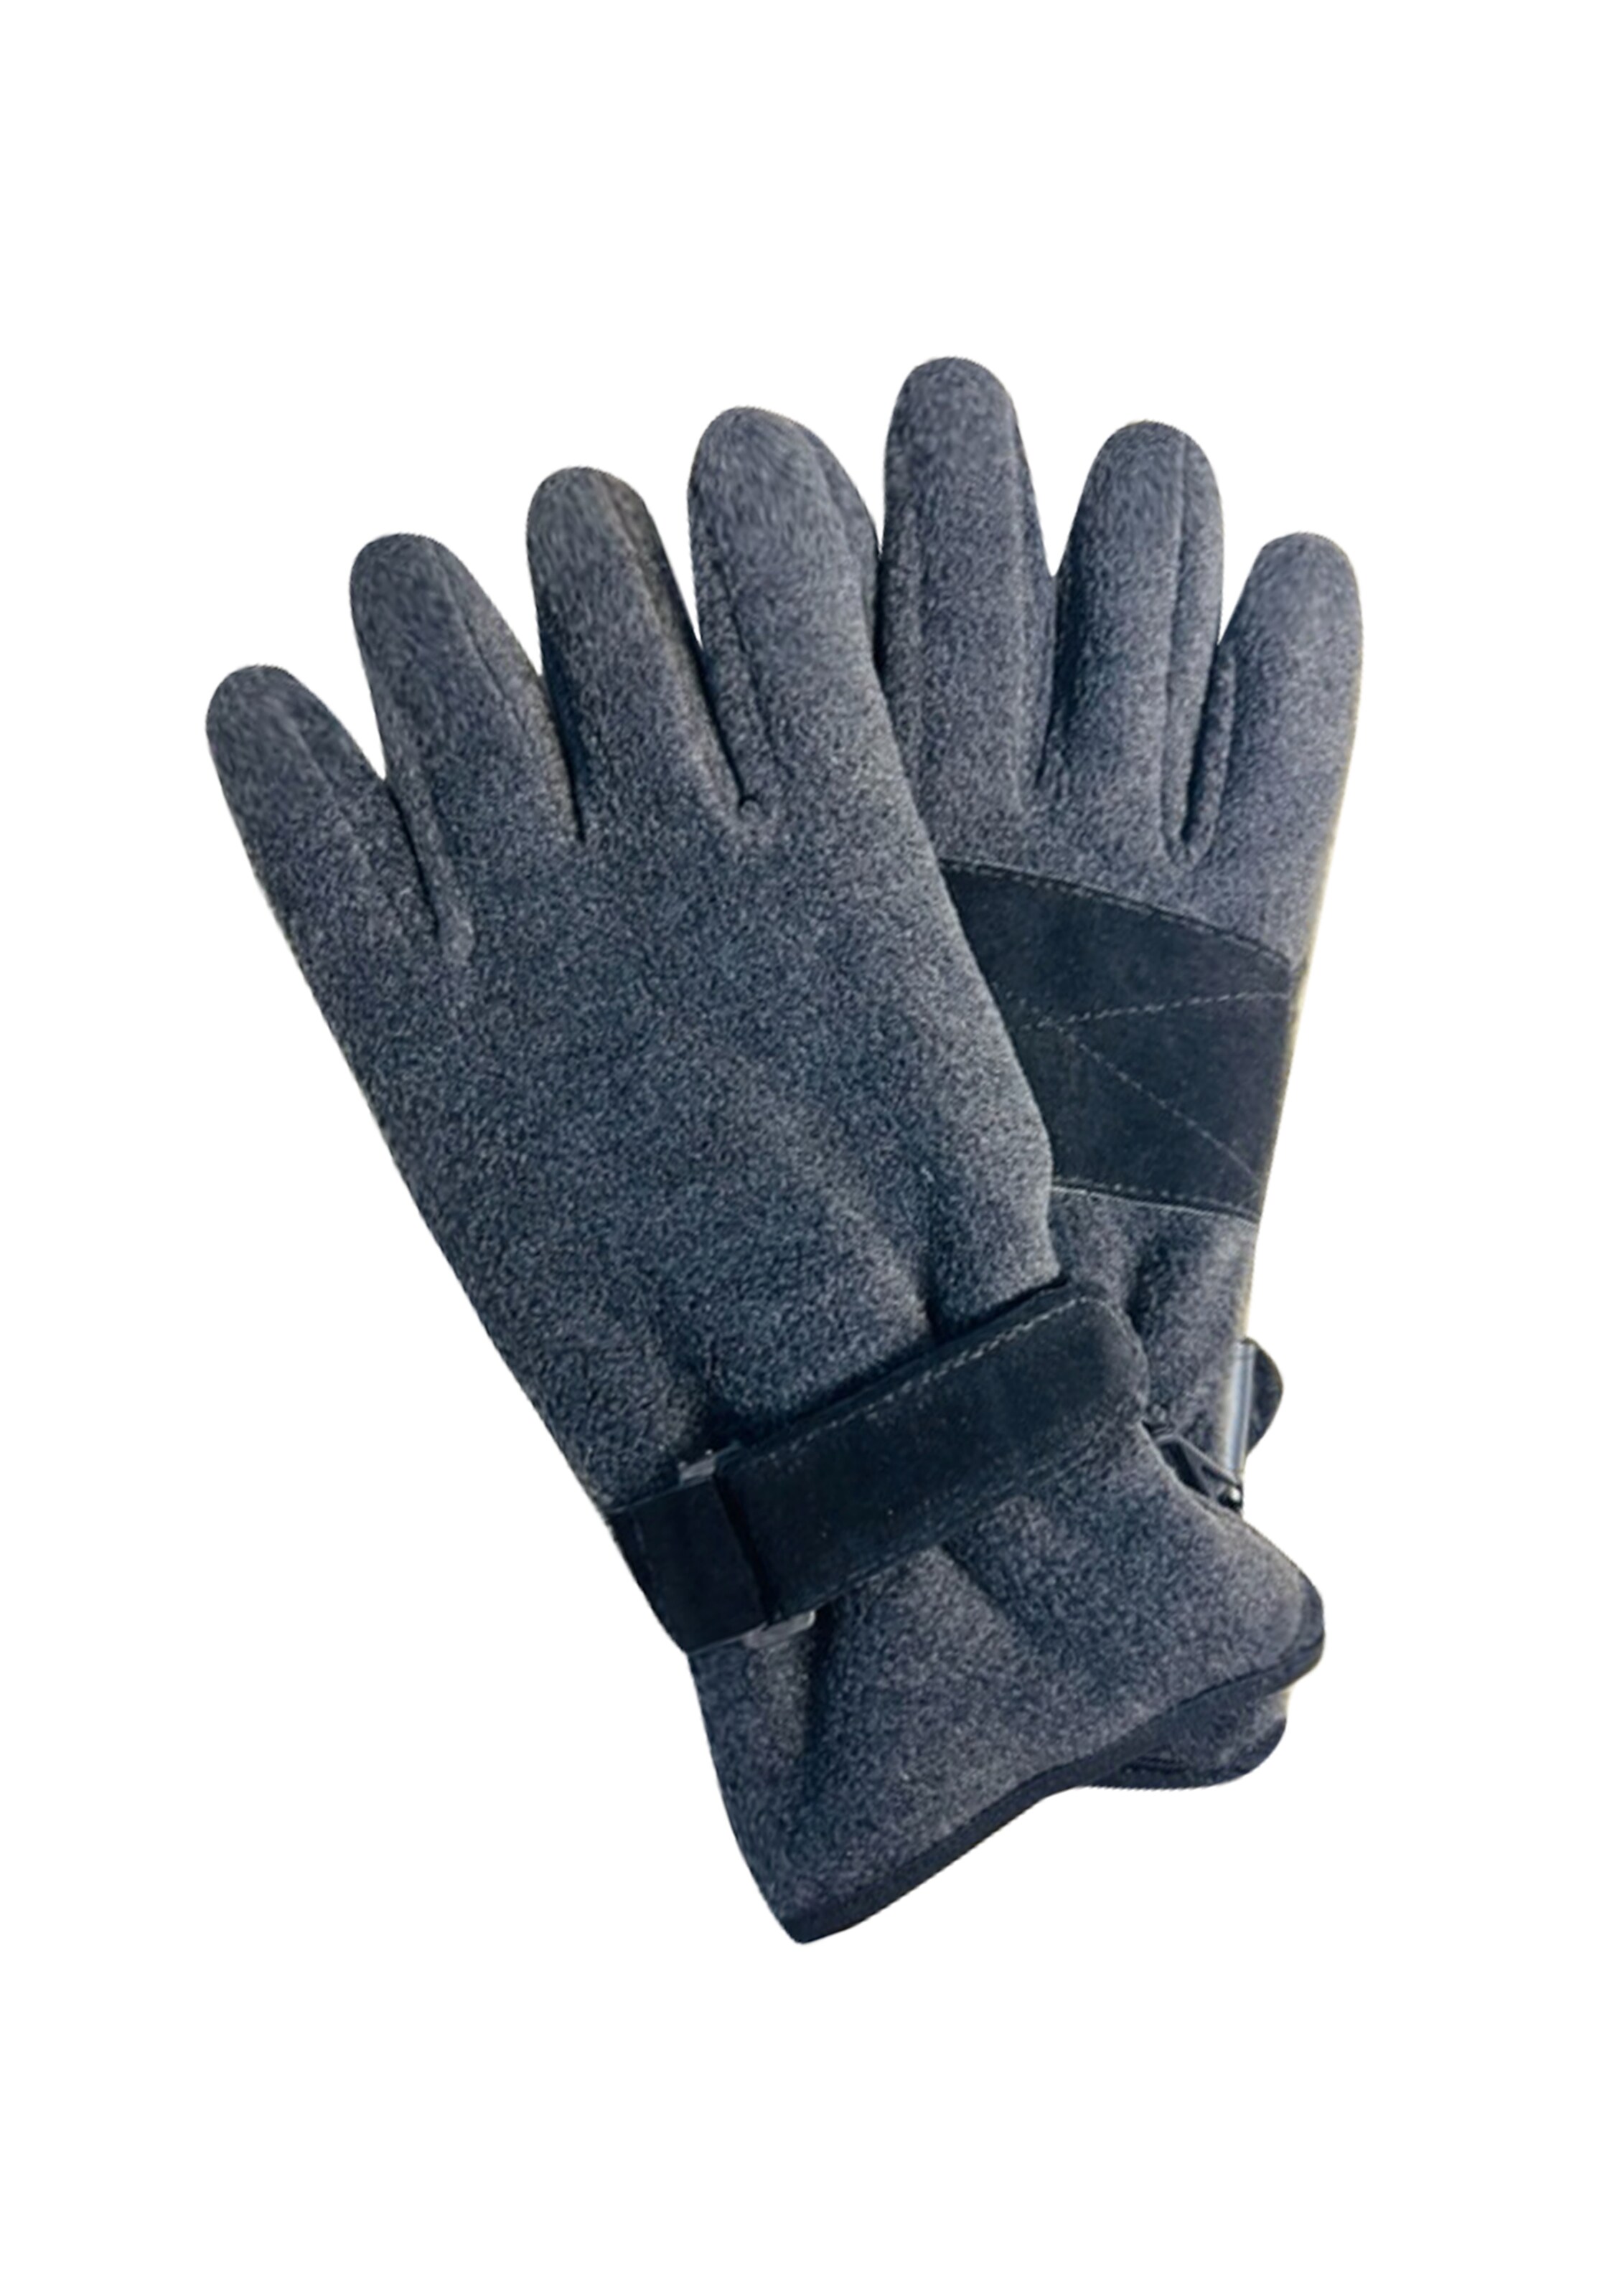 Frauen Handschuhe SAMAYA Fingerhandschuhe 'Thinsulate' in Grau, Anthrazit - XP08661